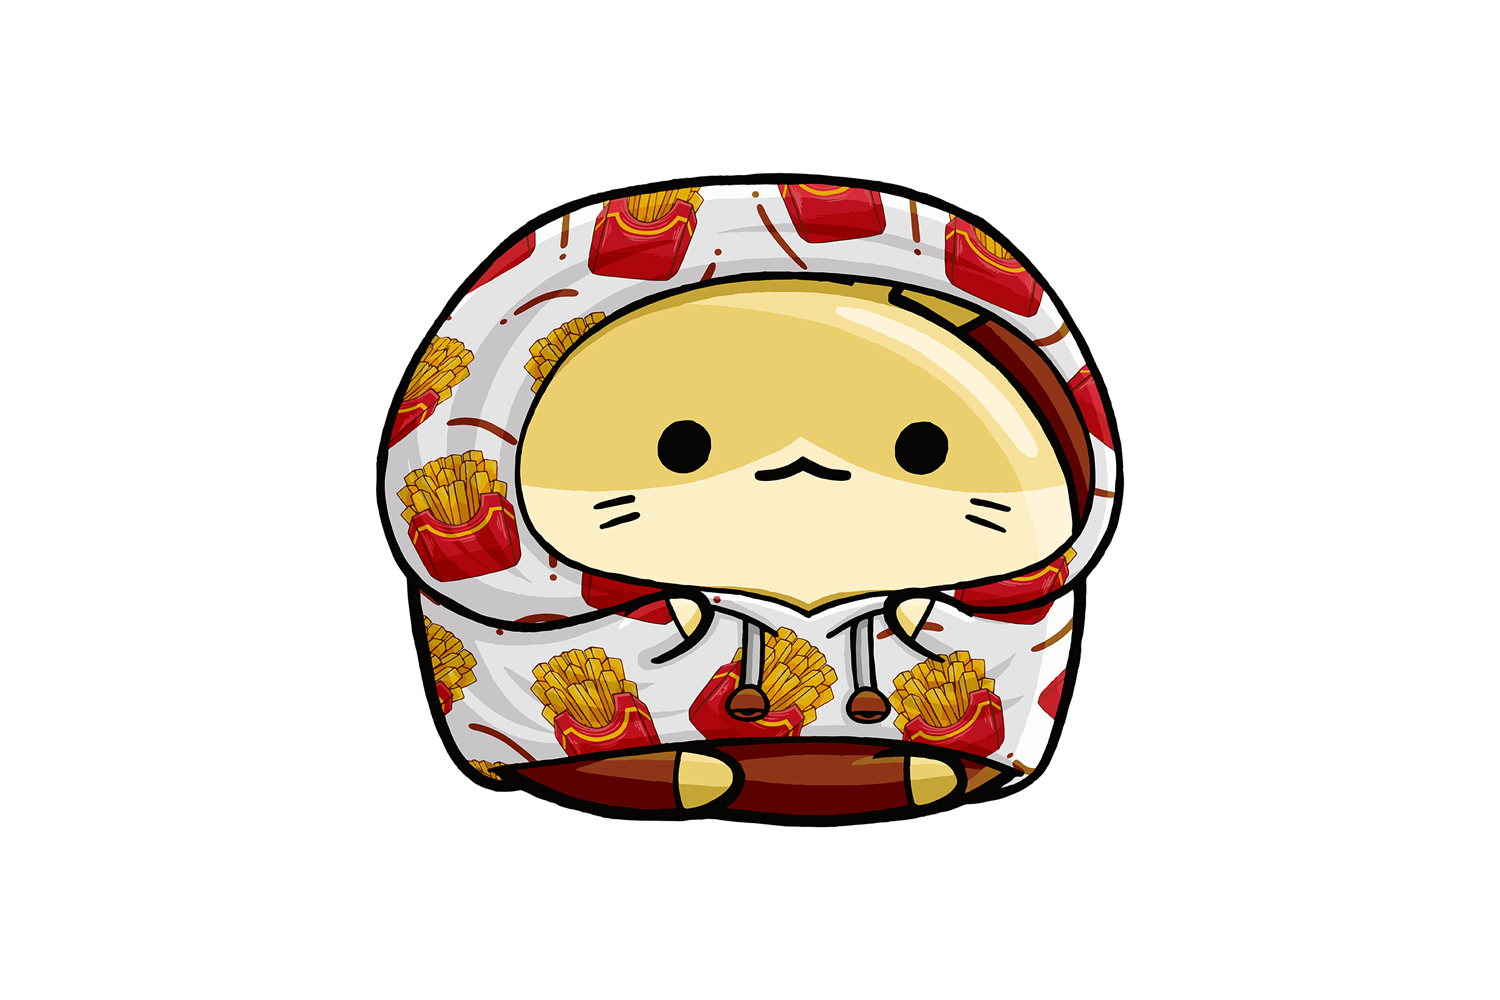 Cute Hamster Fast Food Cartoon 01